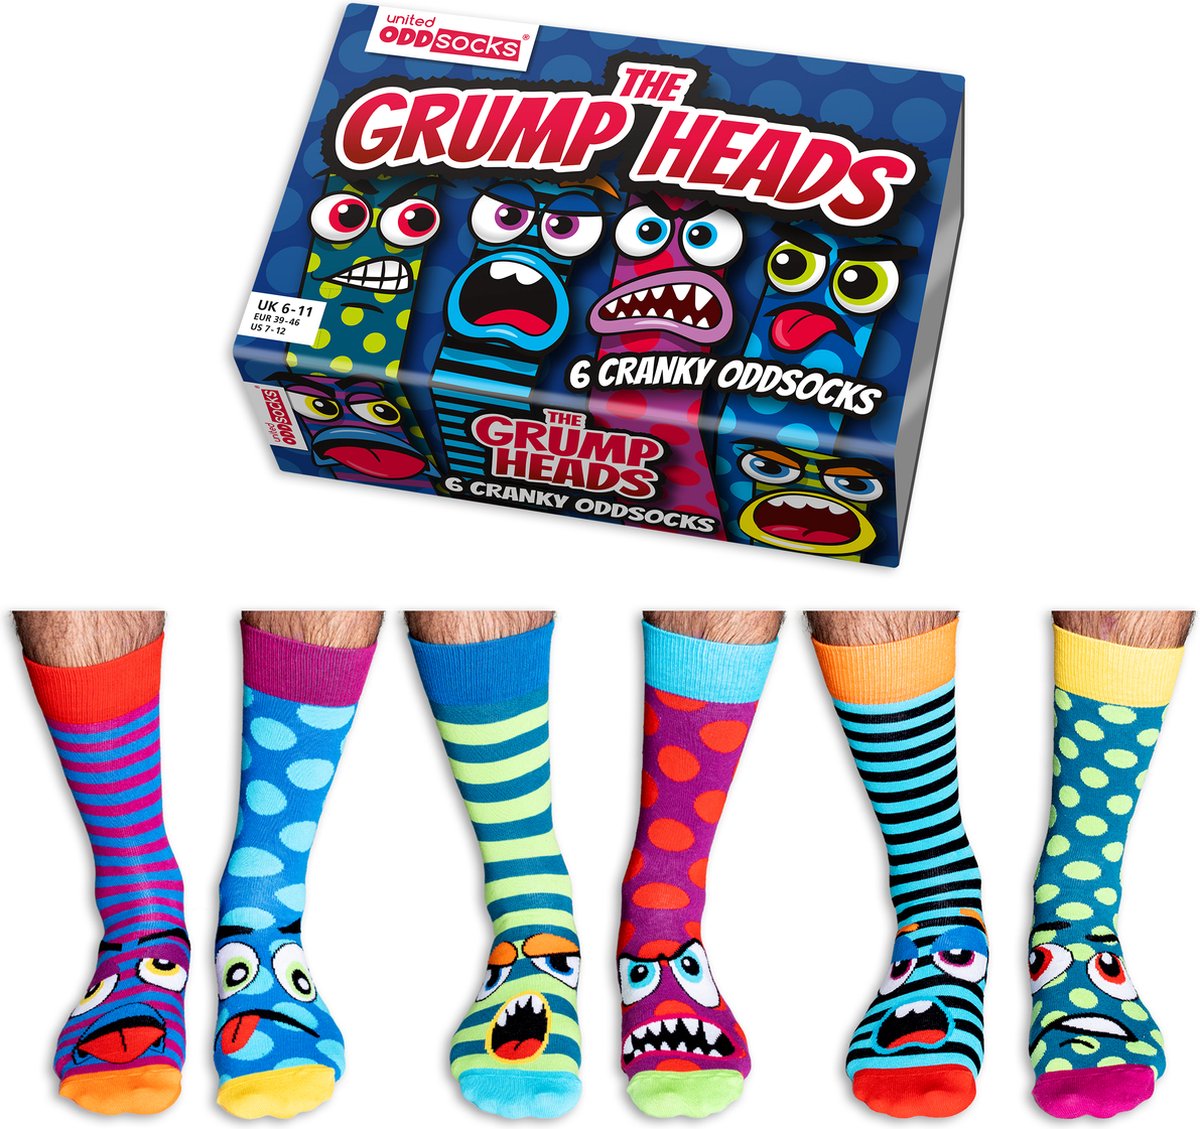 Grumpy-themed Men's Socks